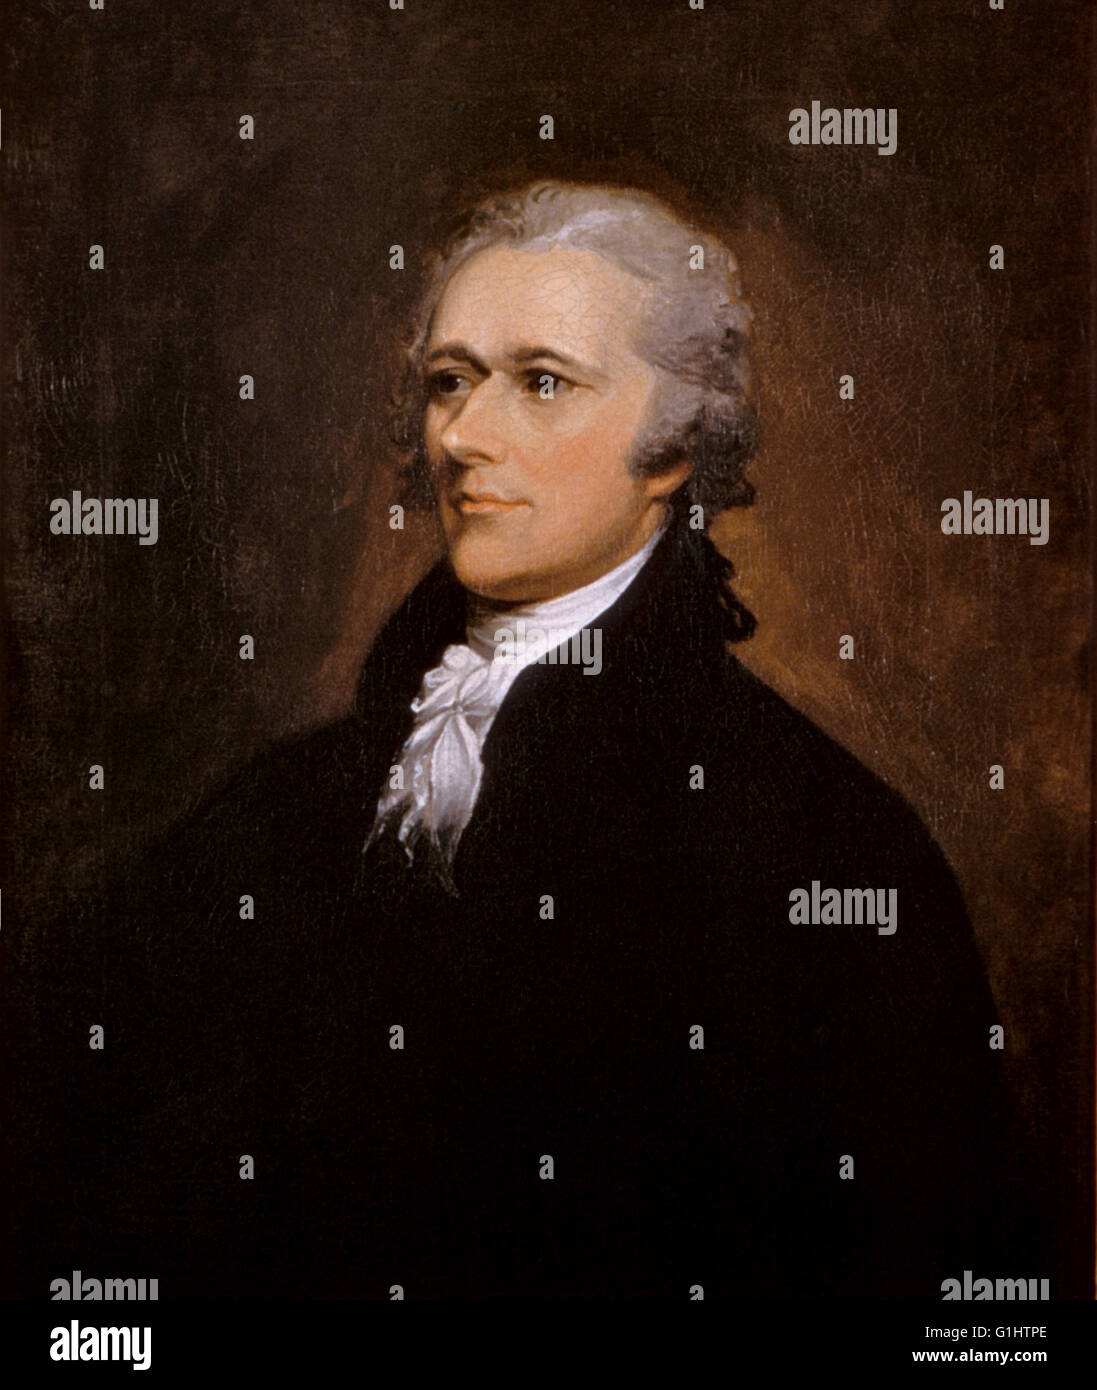 Alexander Hamilton, Founding Father of the United States Stock Photo